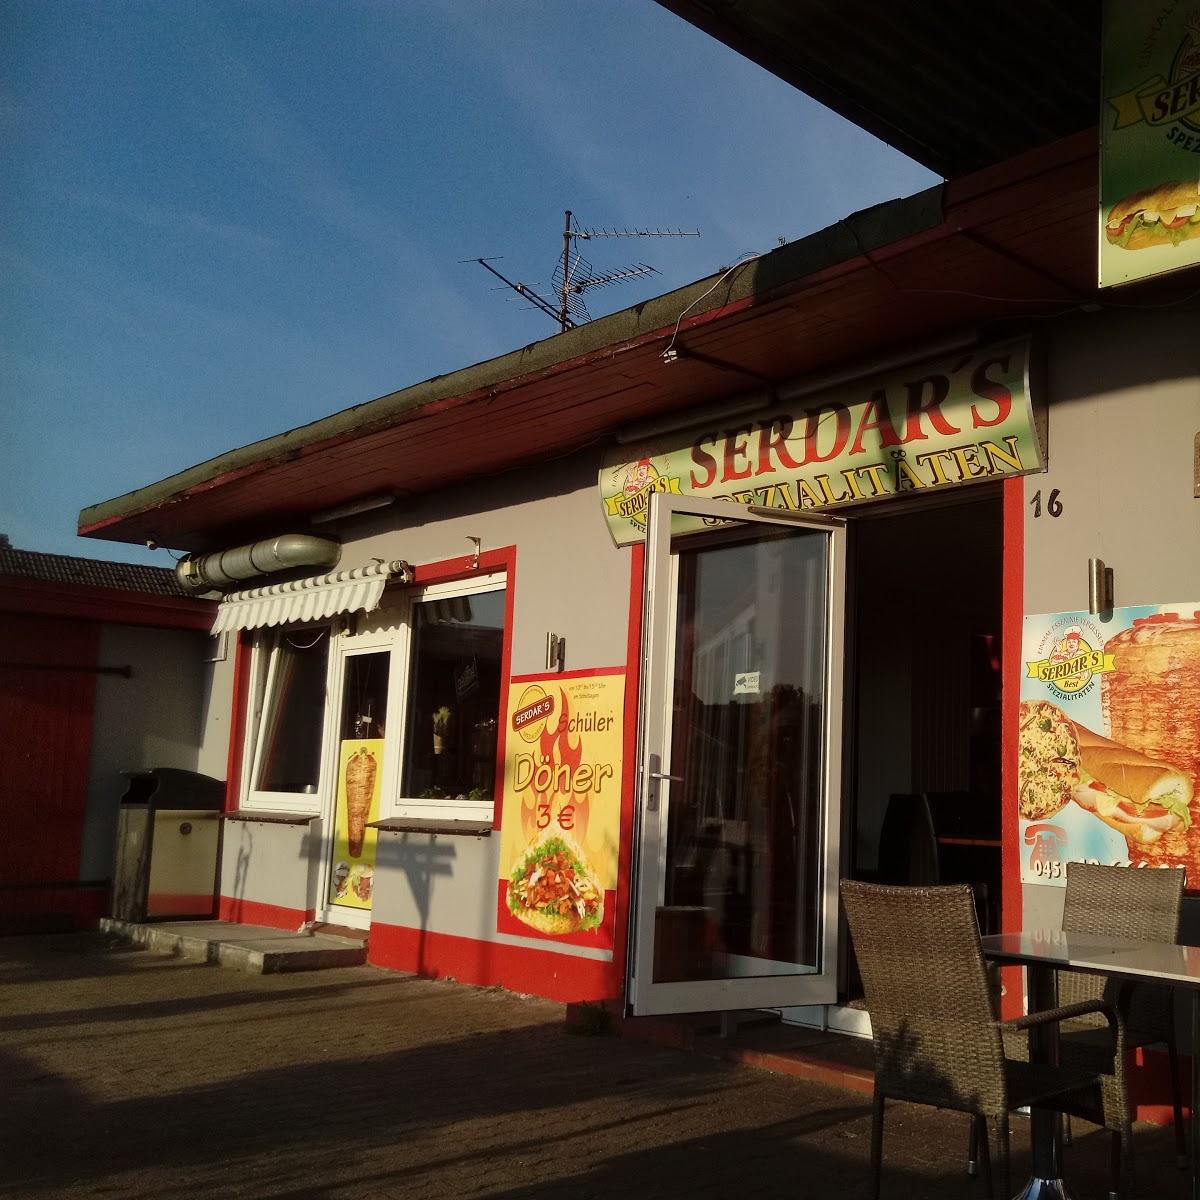 Restaurant "Serdar